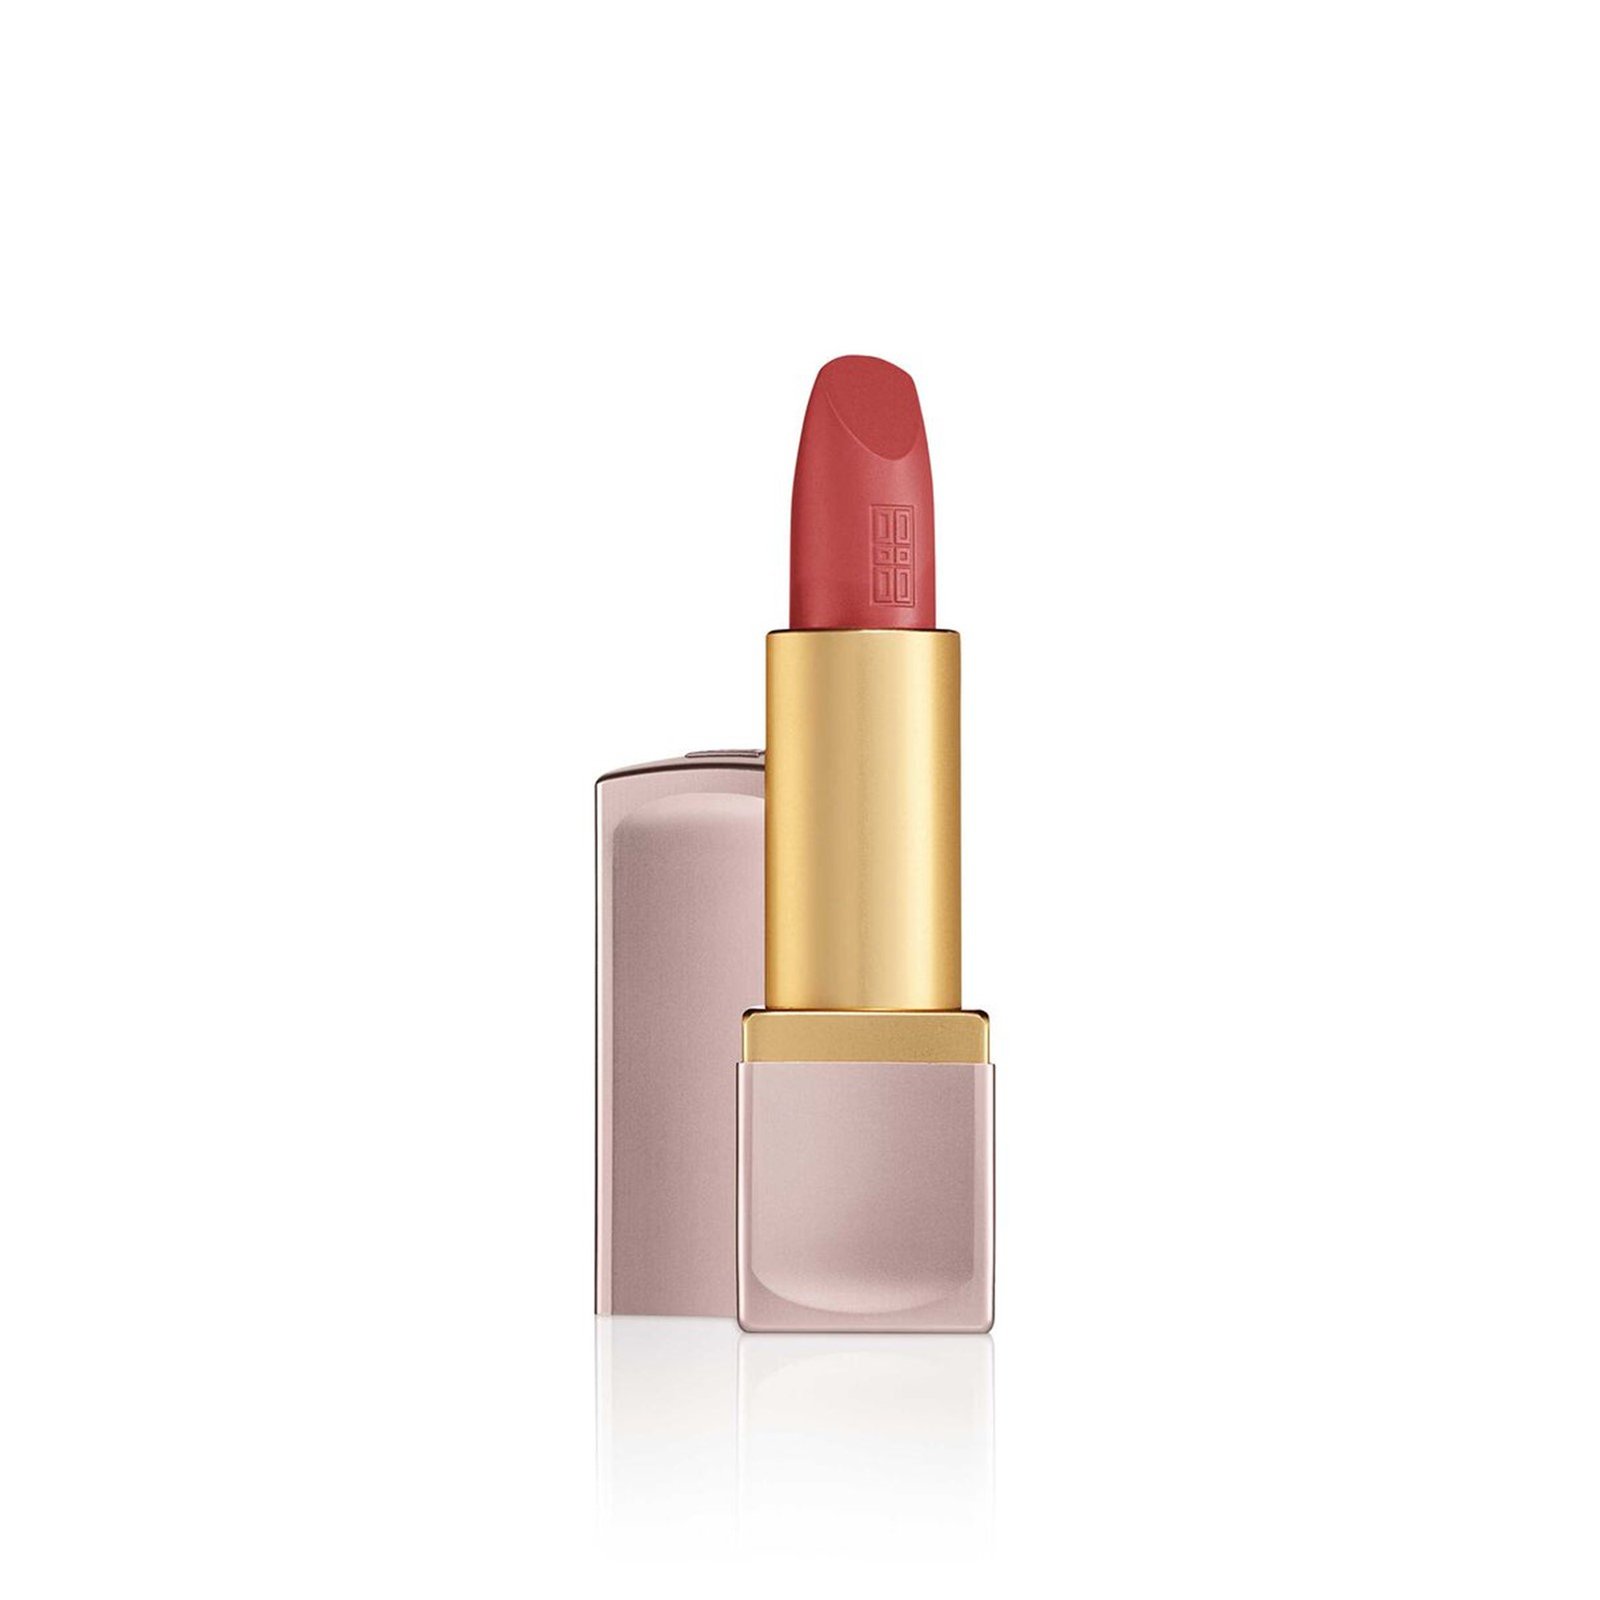 Elizabeth Arden Lip Color Lipstick 02 Embrace Pink Matte 4g (0.14 oz)